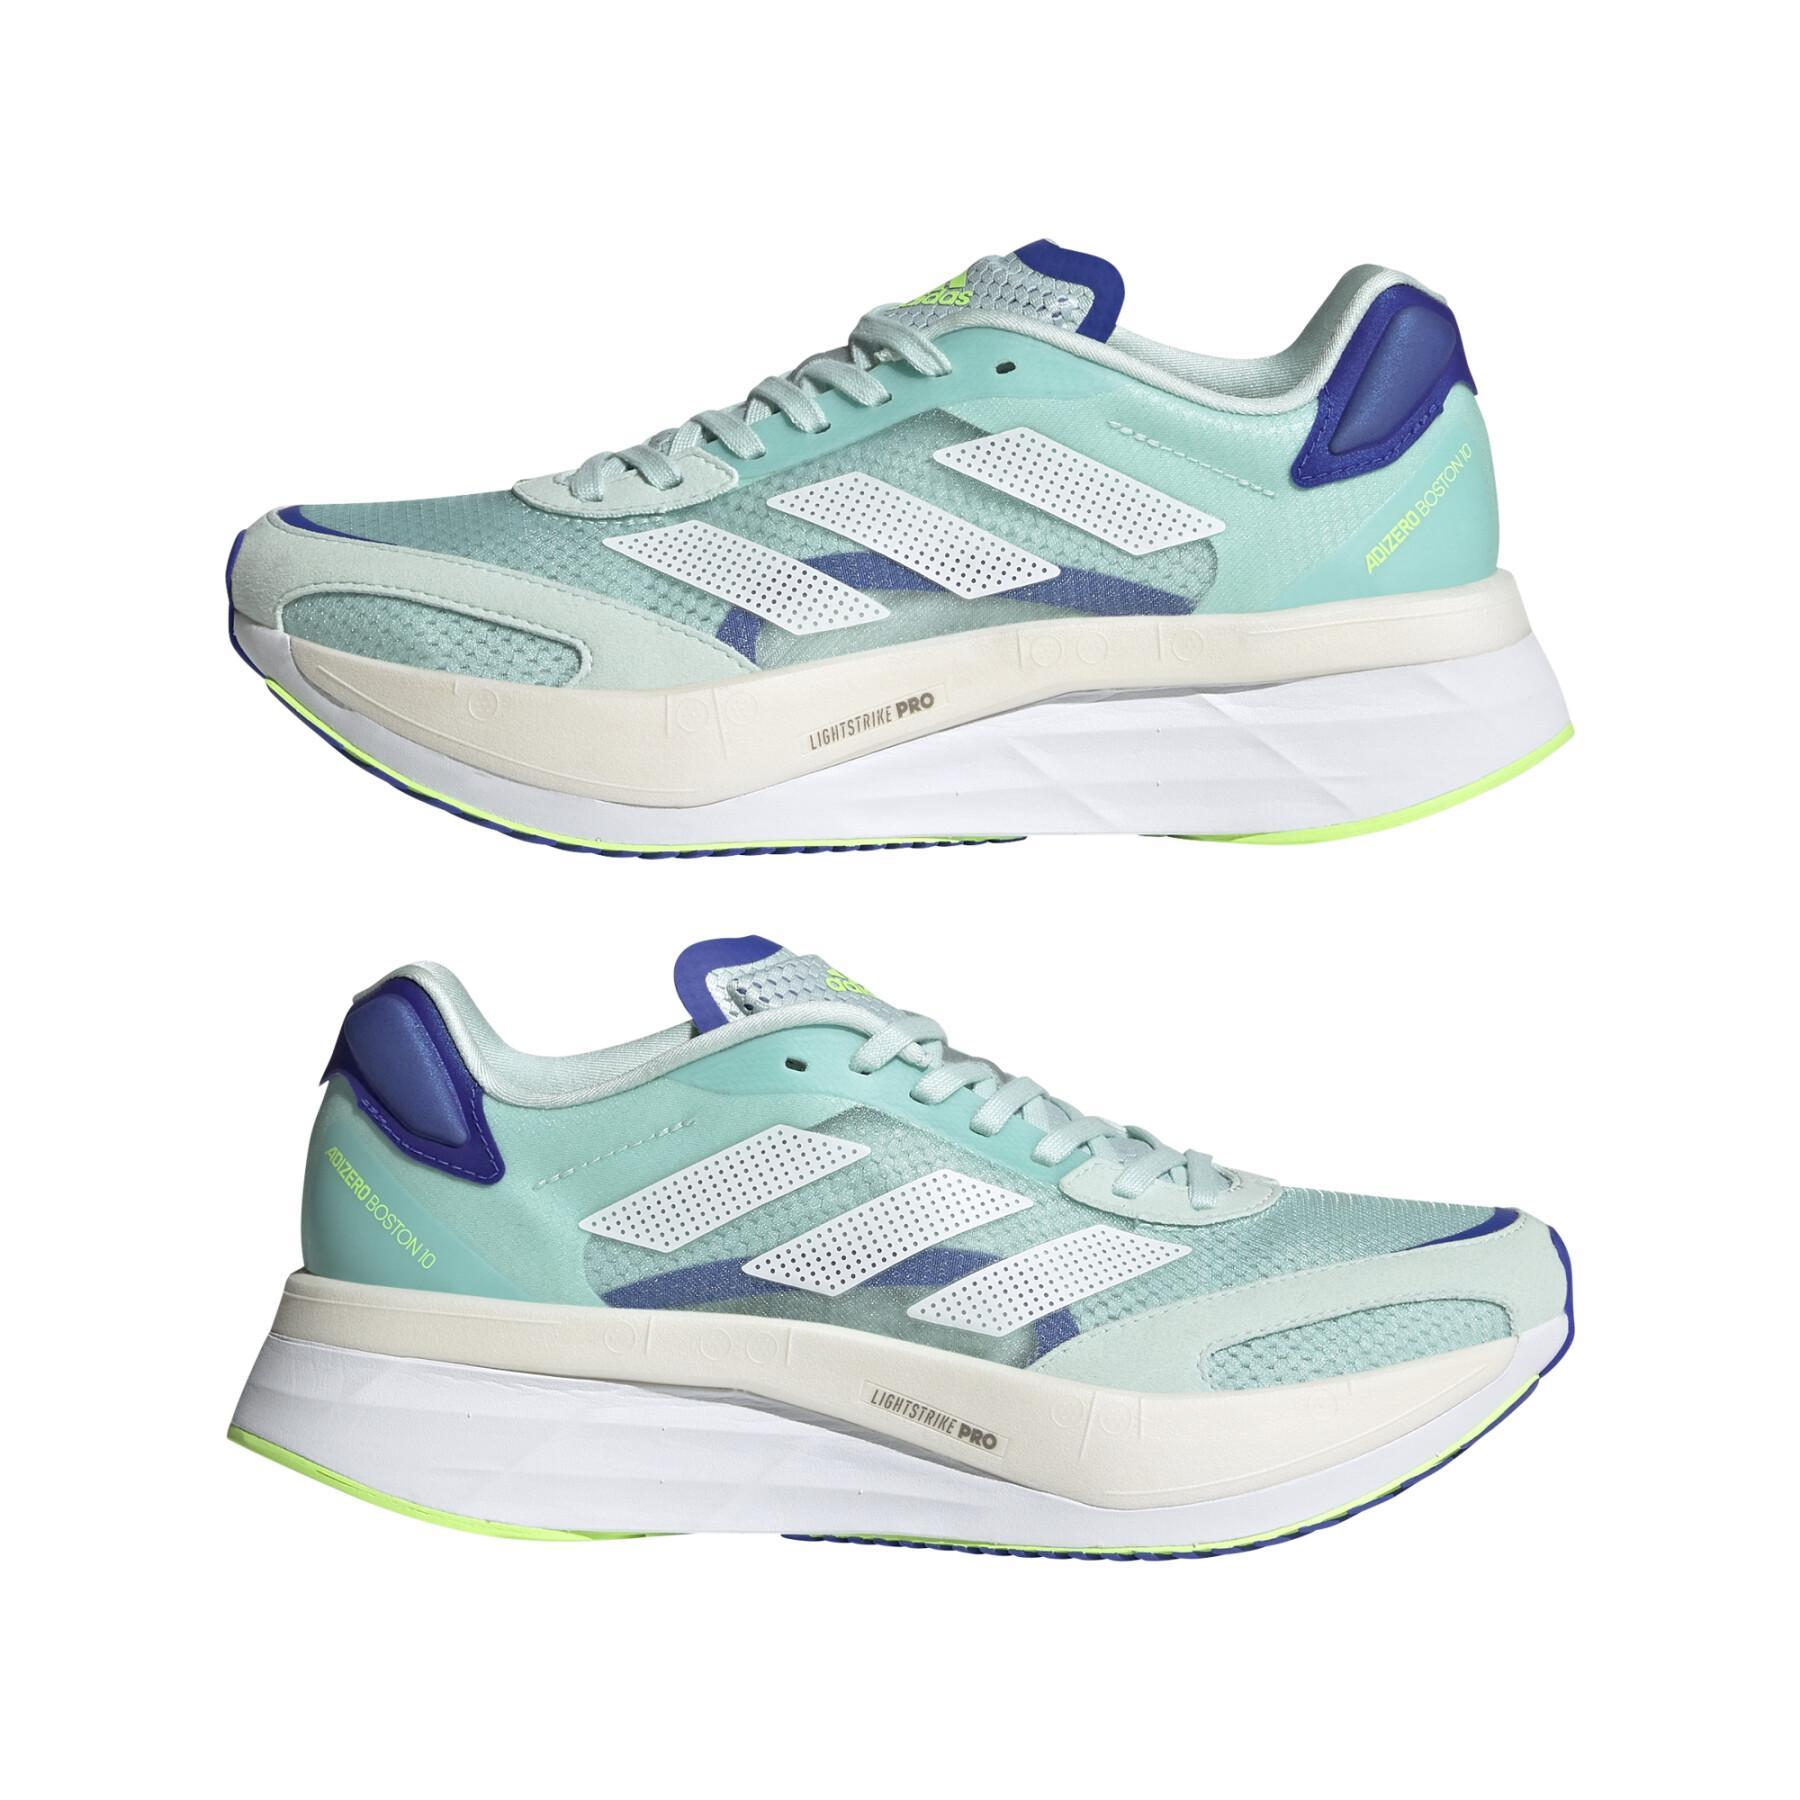 Chaussures de running femme adidas Adizero Boston 10